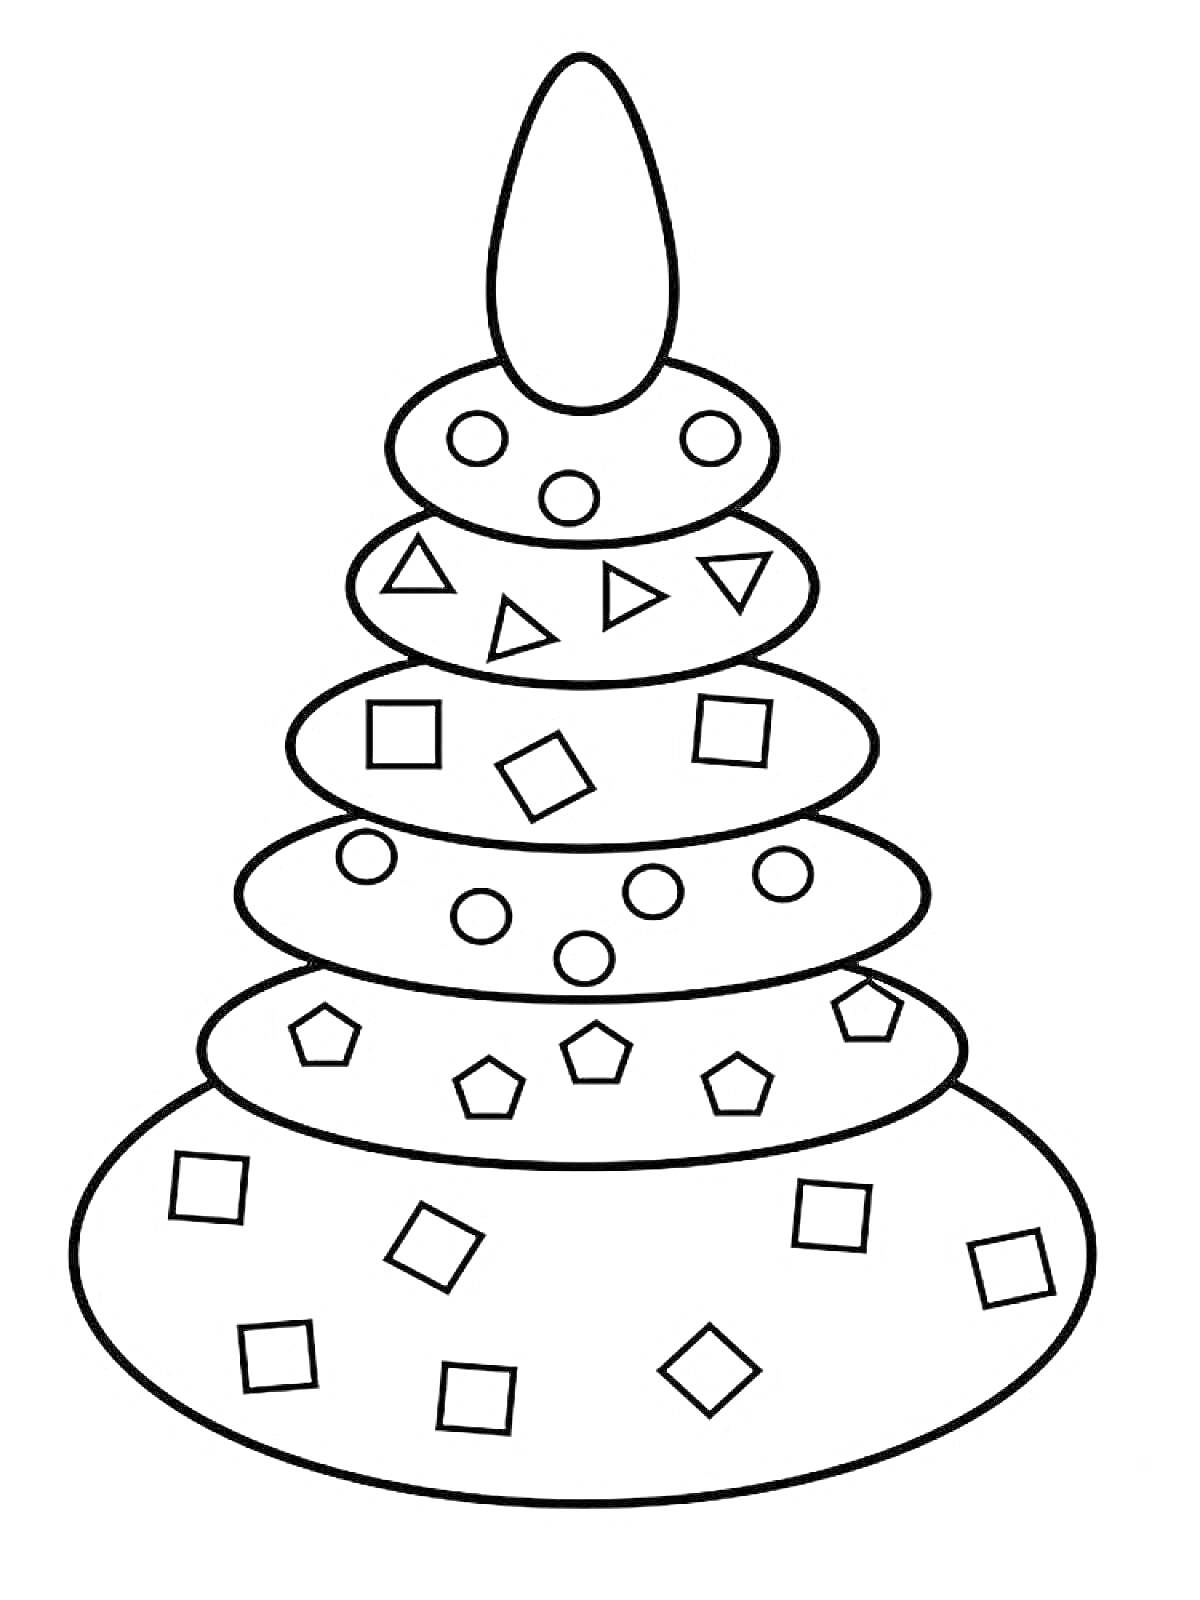 На раскраске изображено: Пирамидка, Игрушка, Круги, Треугольники